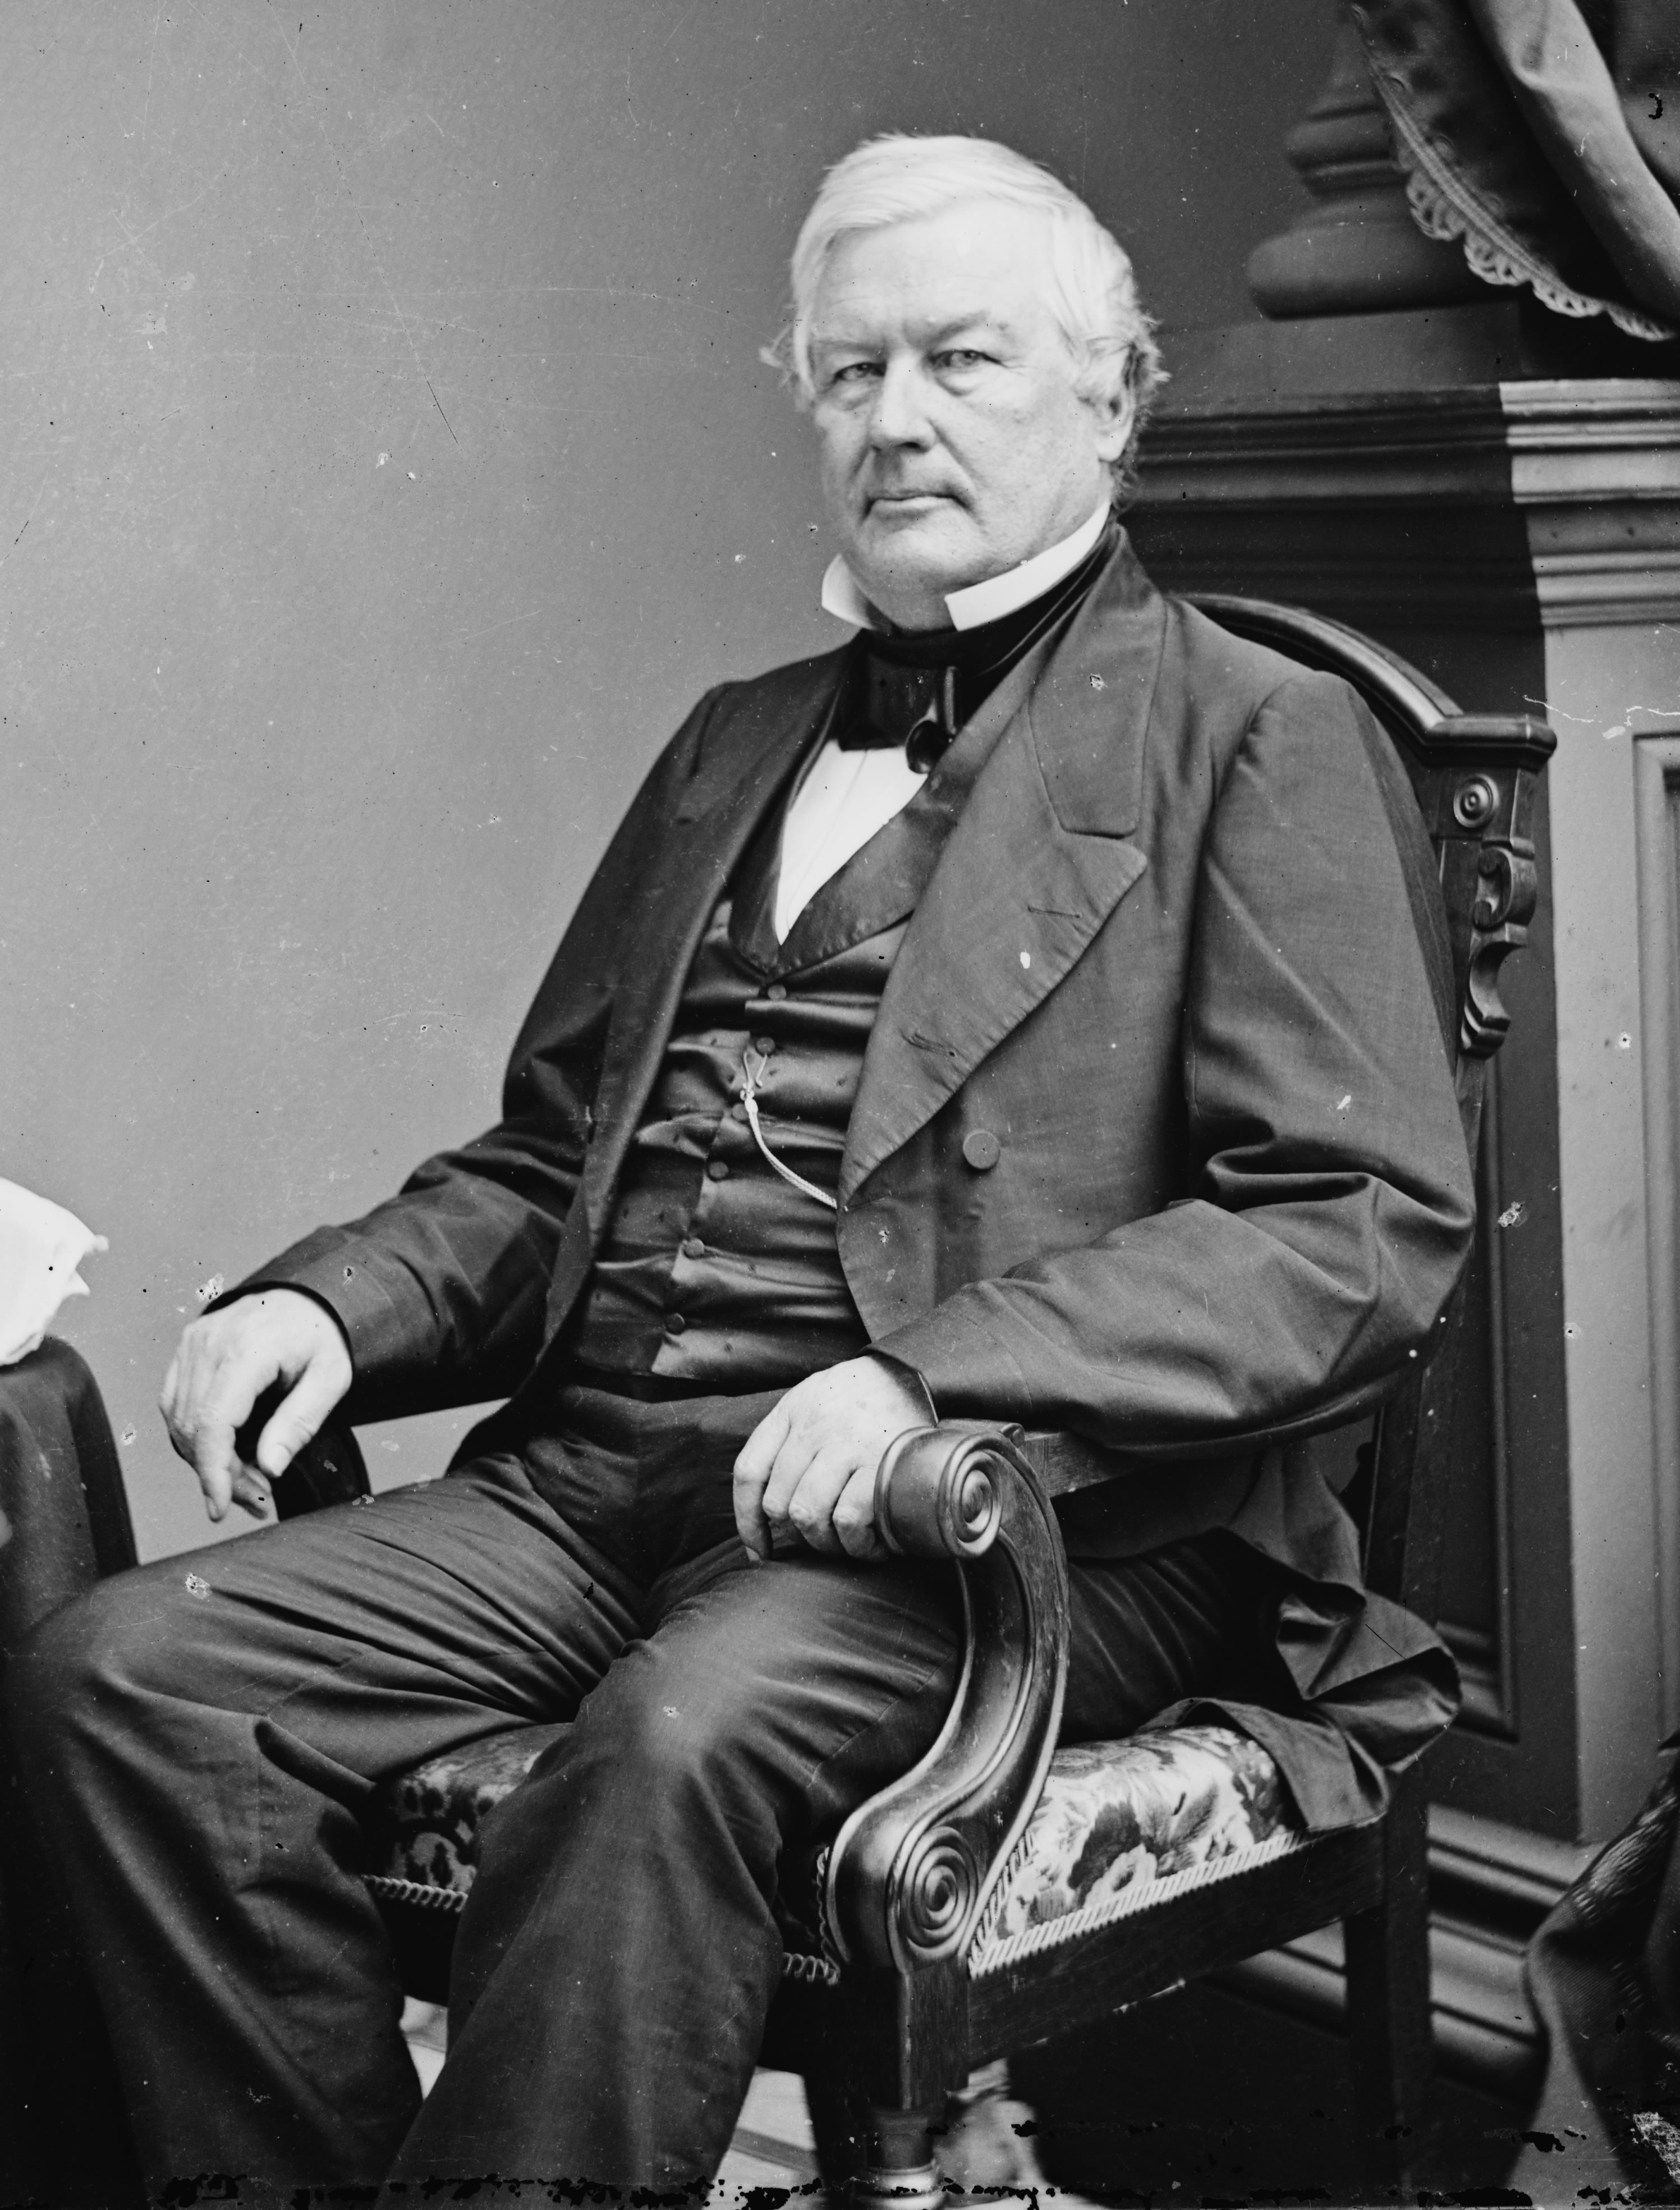 Photo of President Millard Fillmore by Mathew B. Brady circa 1855-1865. Part of the Library of Congress Brady-Handy photograph collection.